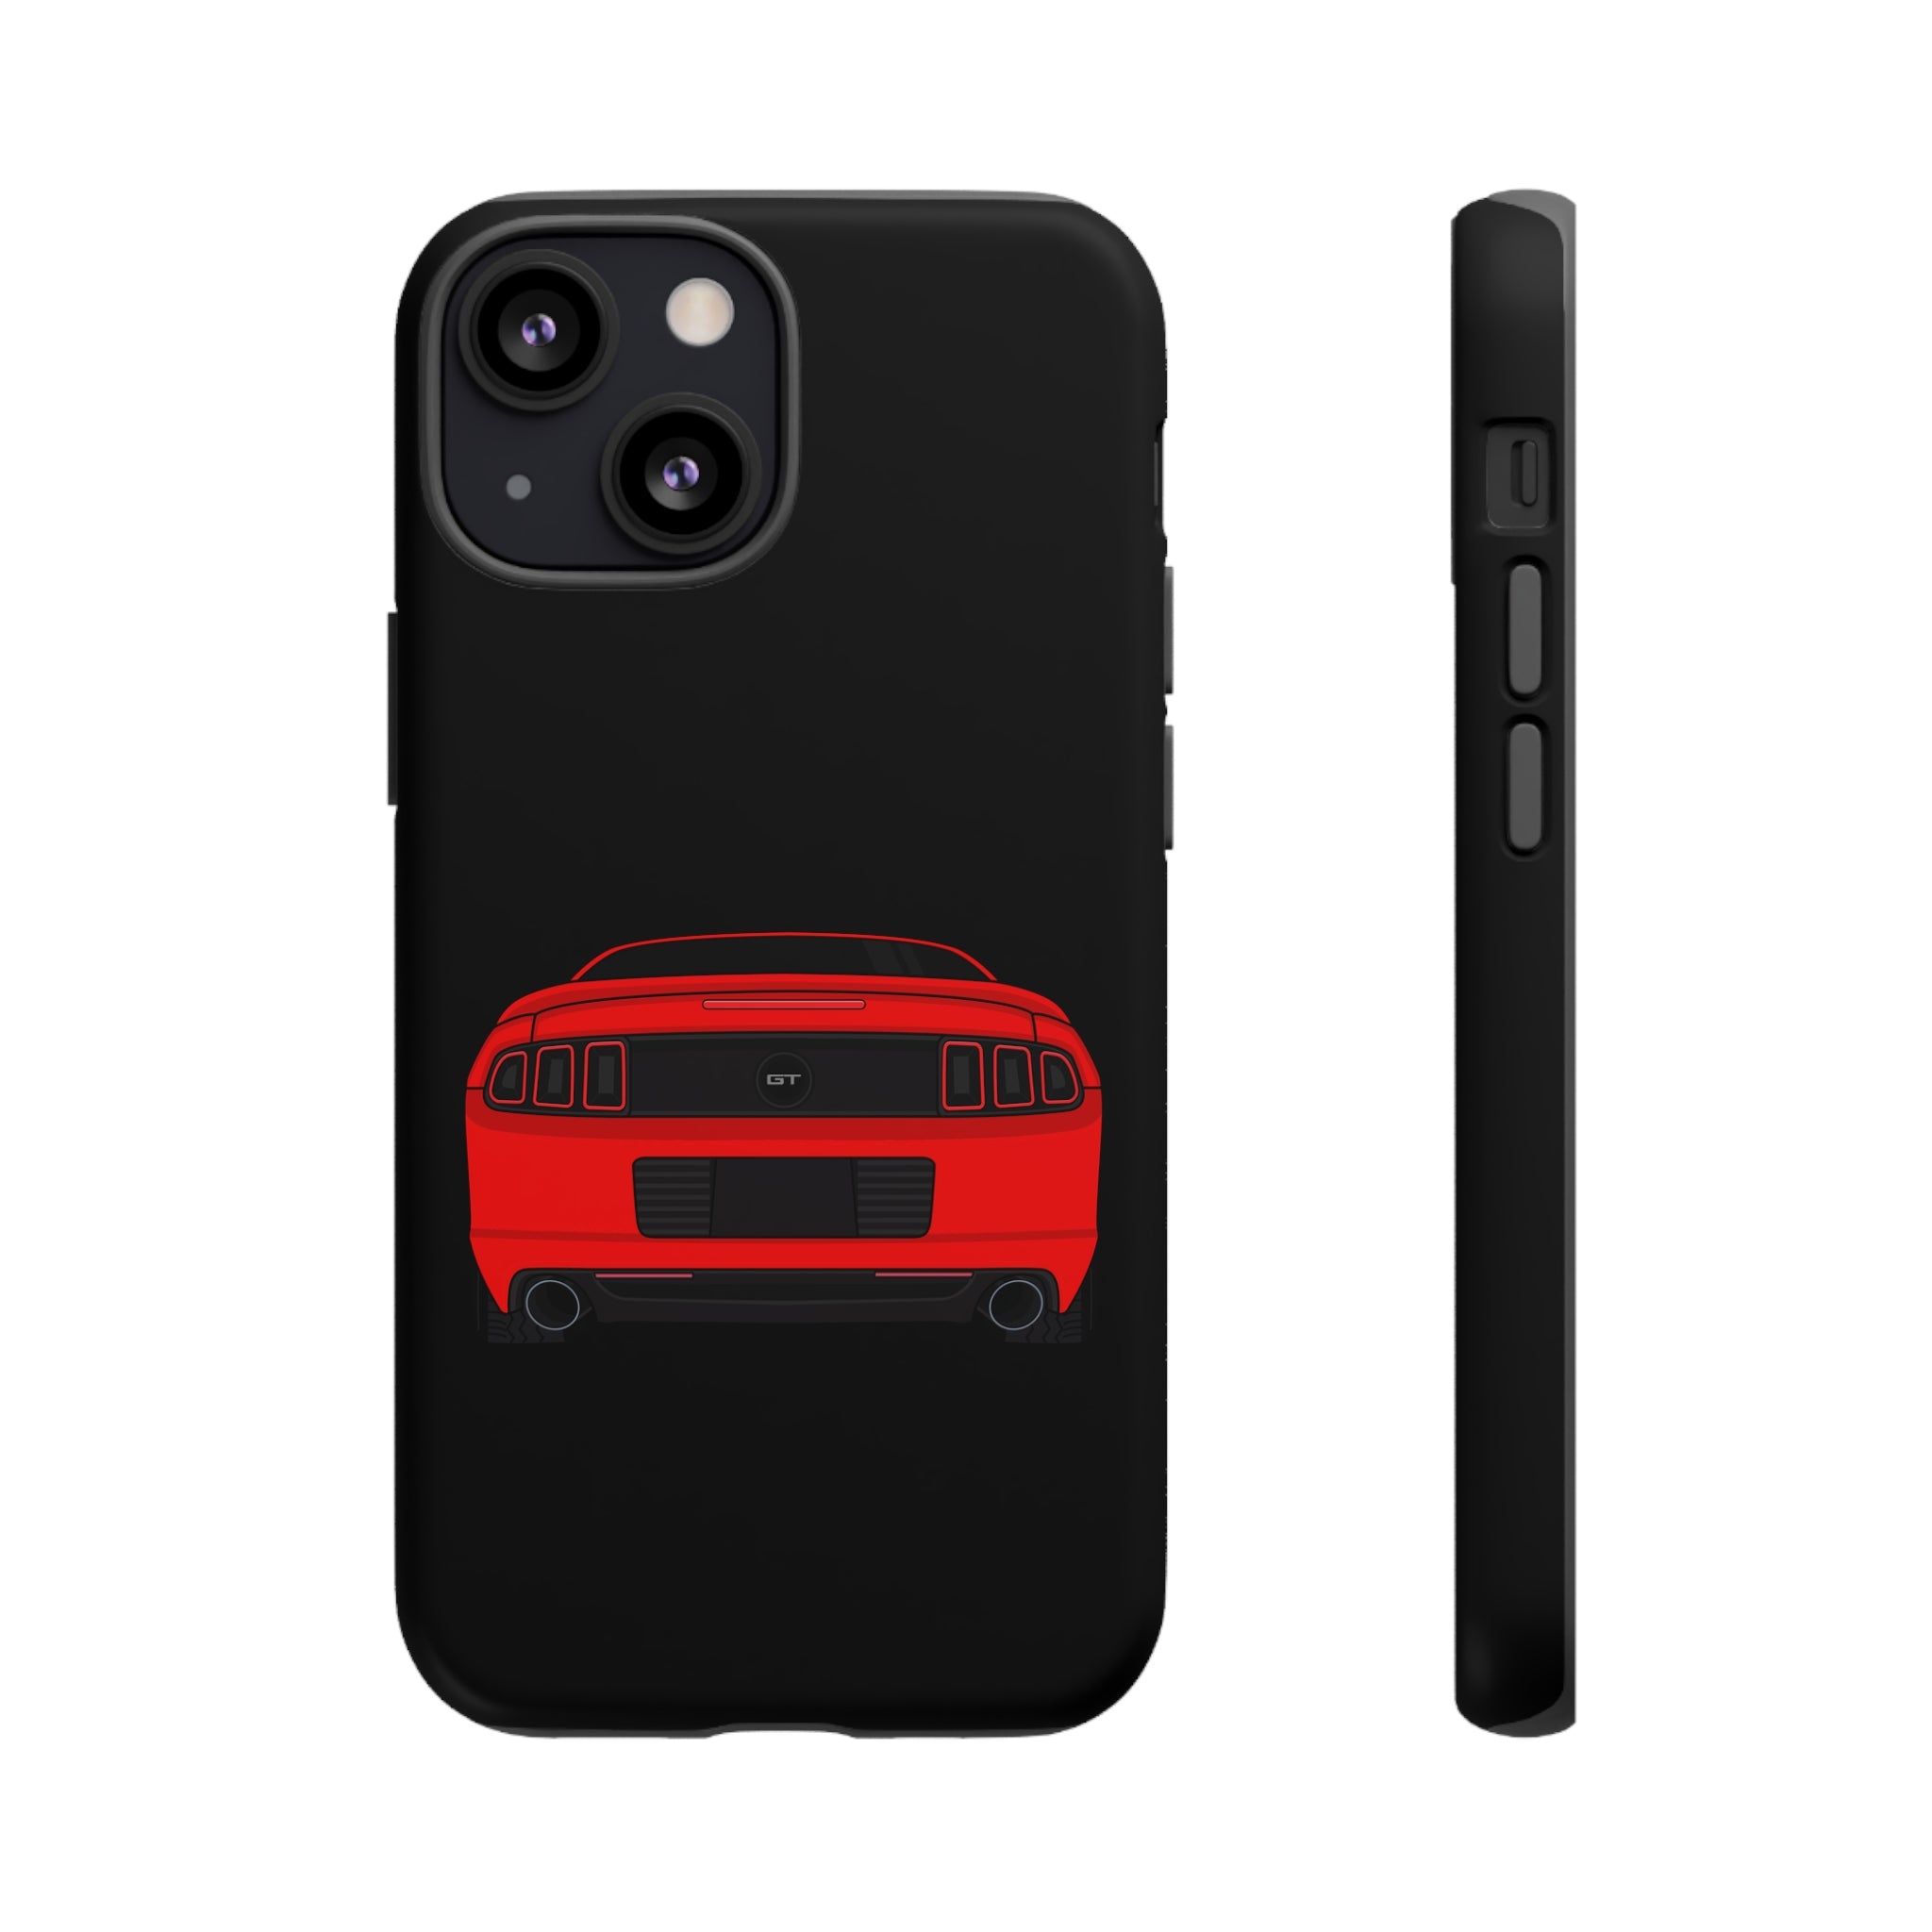 2013/14 Race Red Samsung Case (Rear)